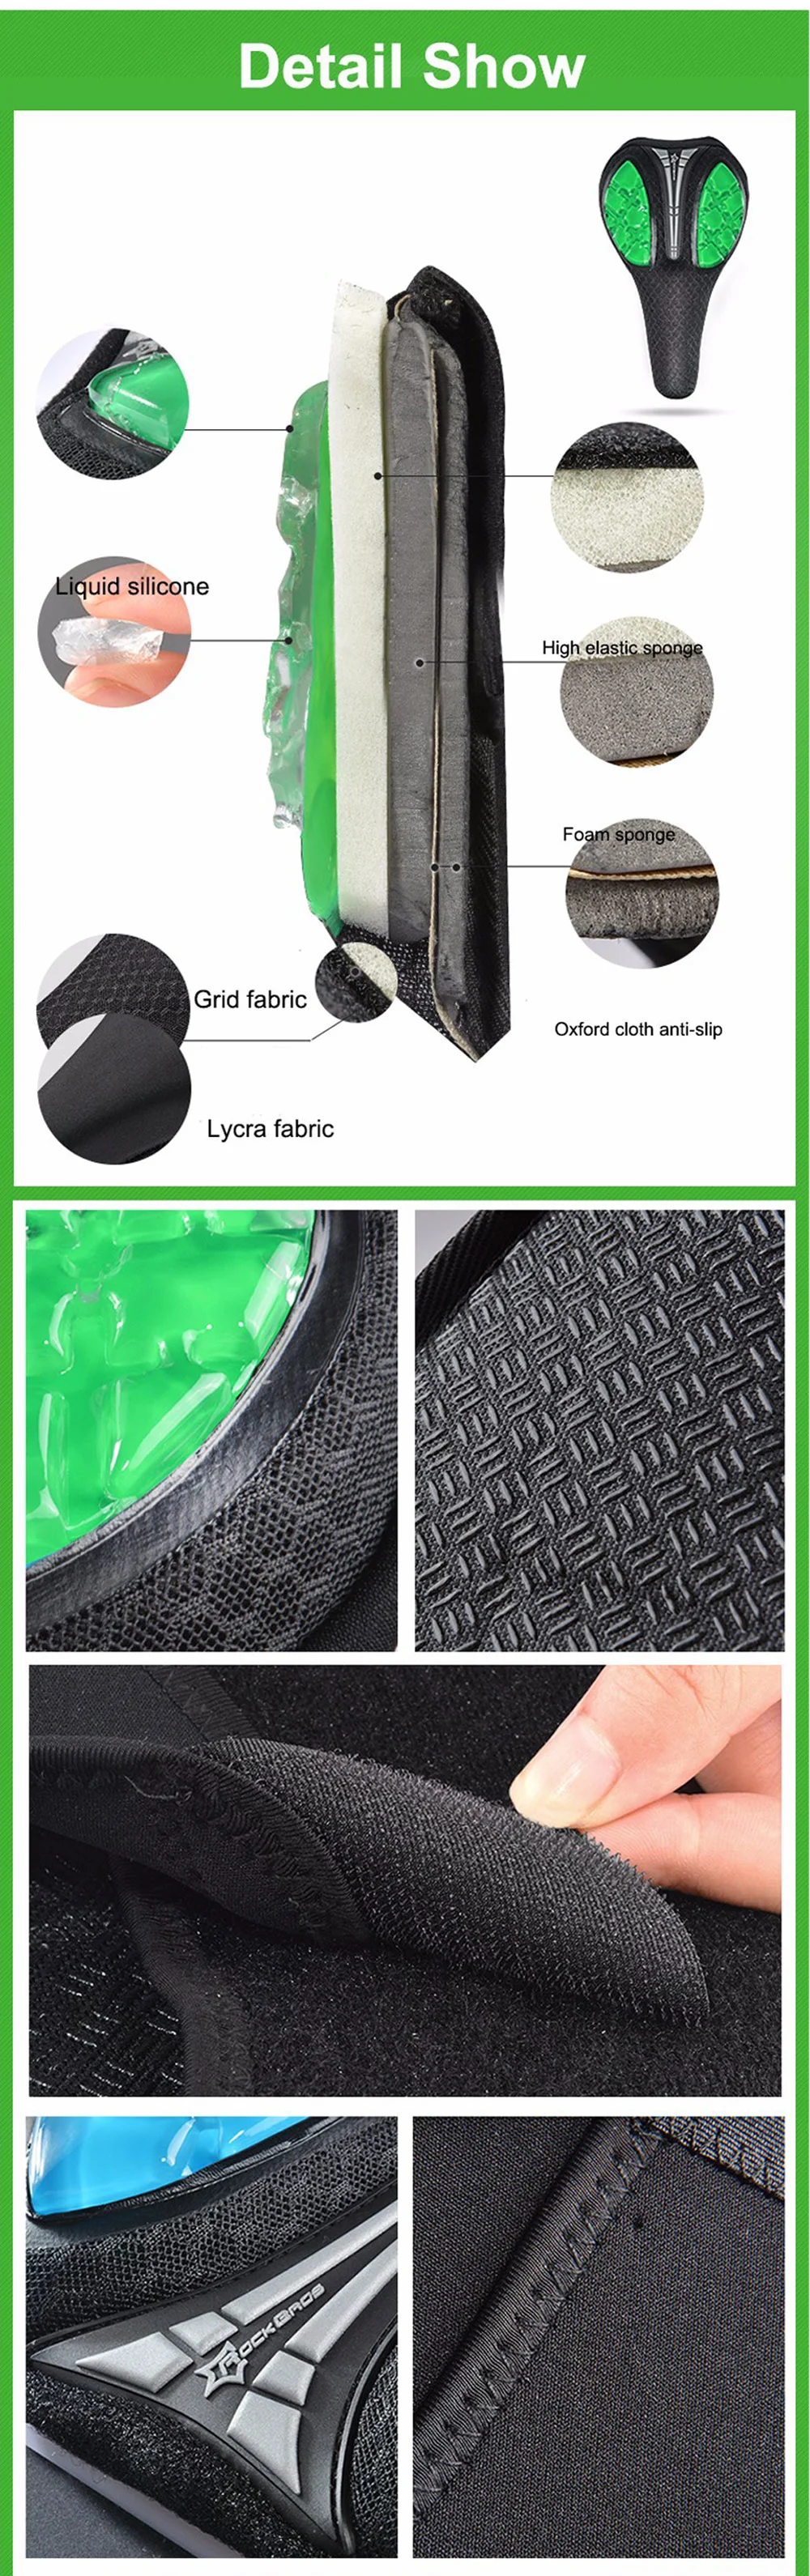 New Design Waterproof Shockproof PVC Bike Saddle Bicycle Seat